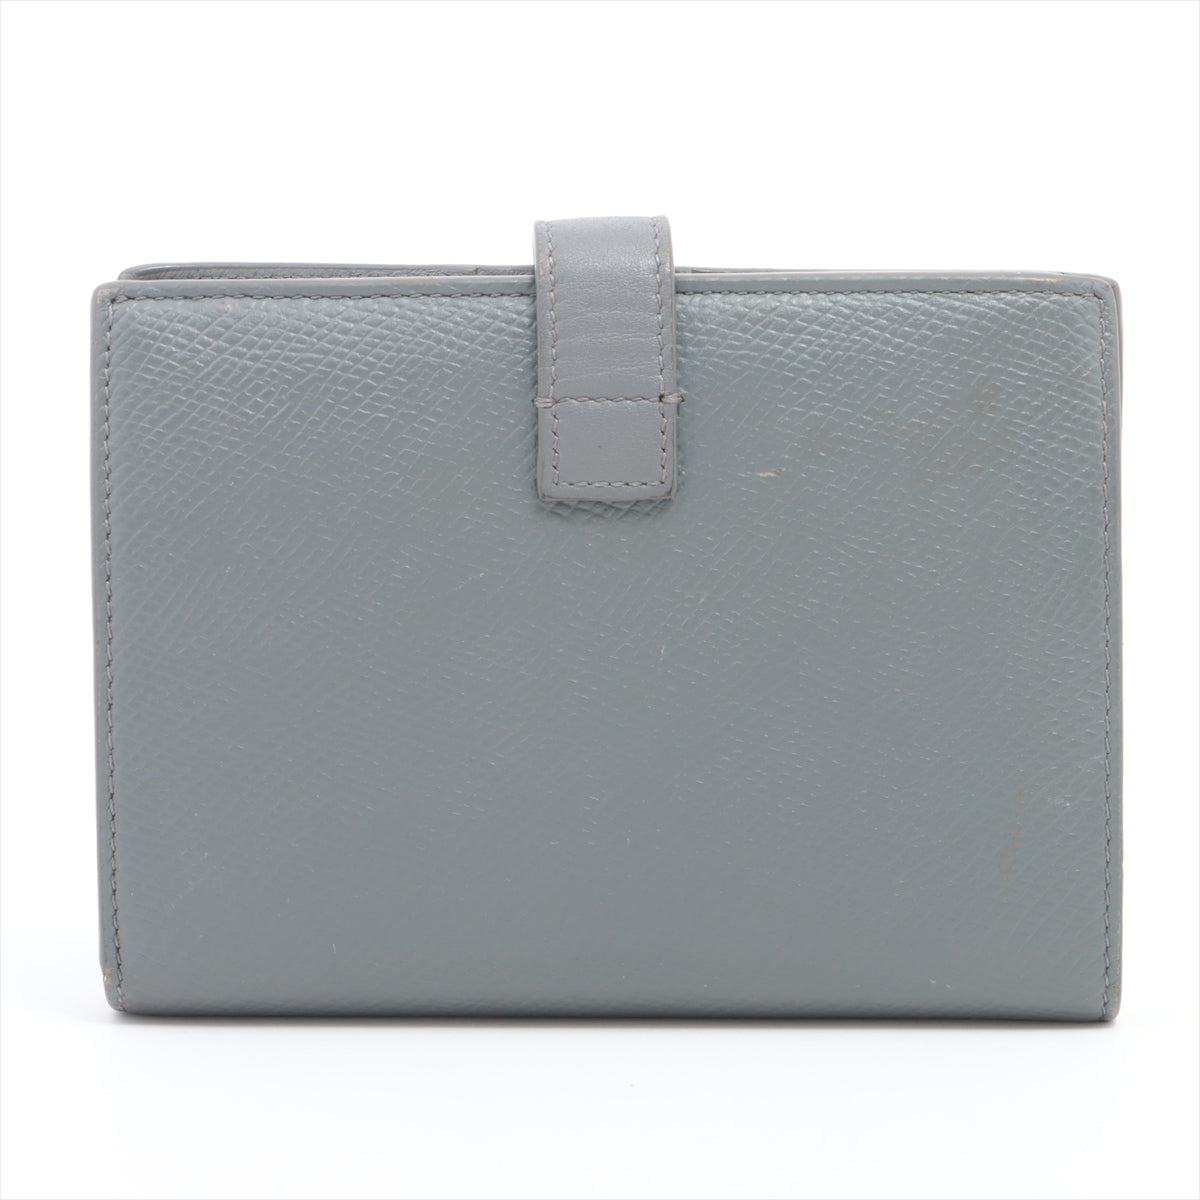 Celine Medium Strap Leather Wallet Gr Corner Cut Coin Coloured